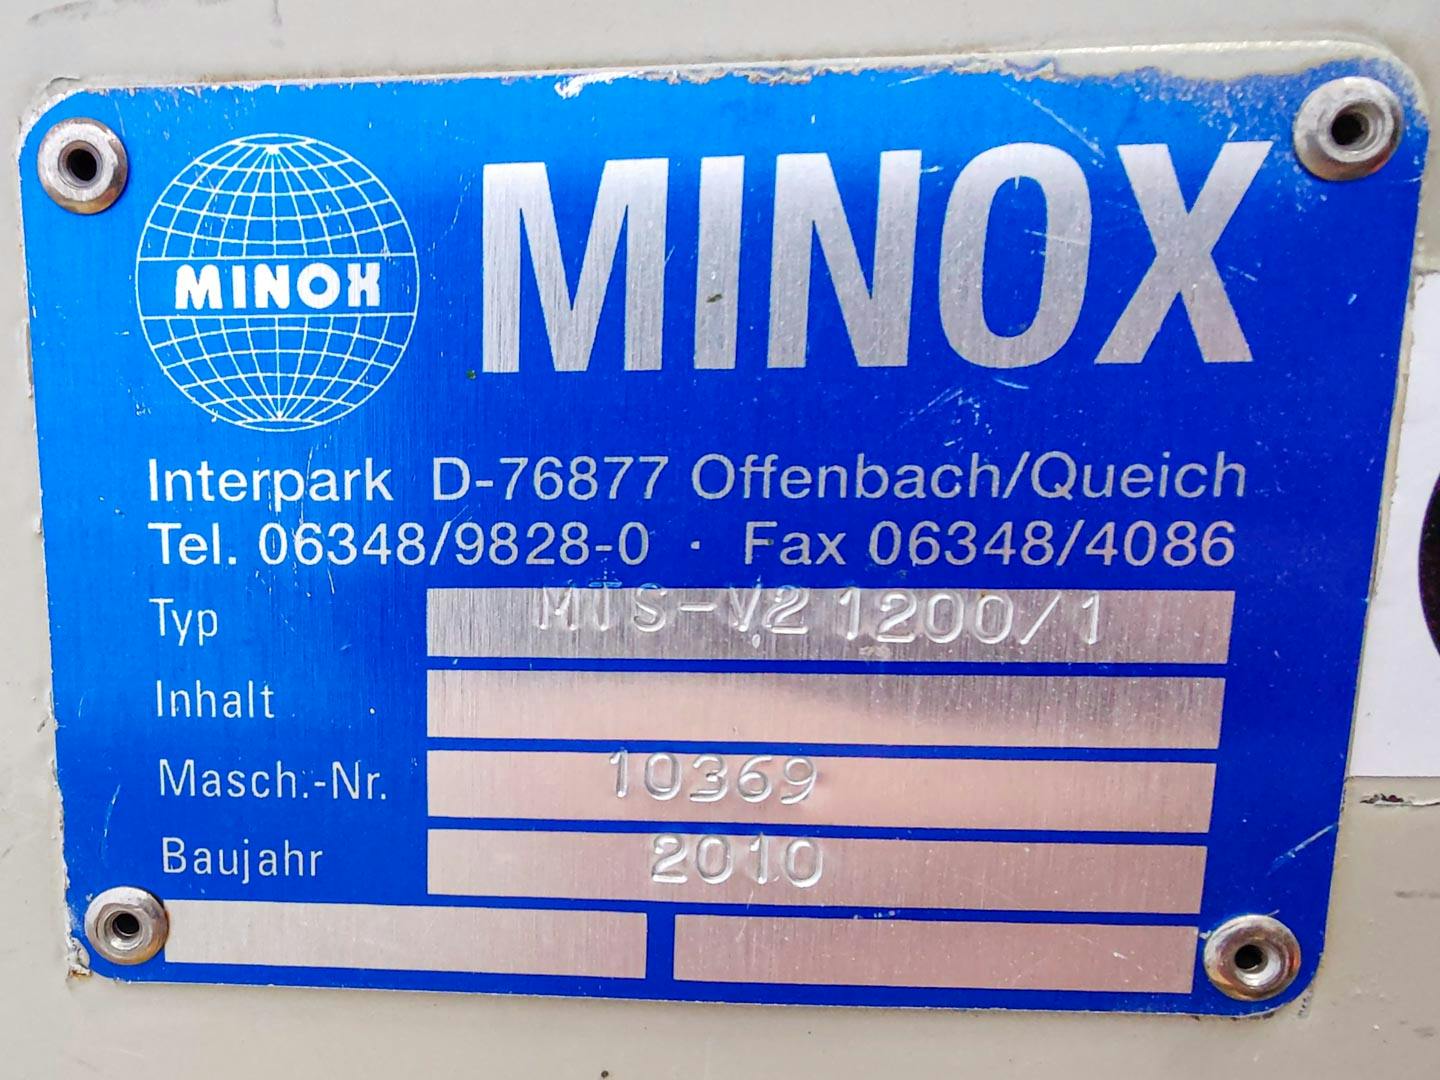 Minox MTS-V2 1200/1 - Vibro sieve - image 10